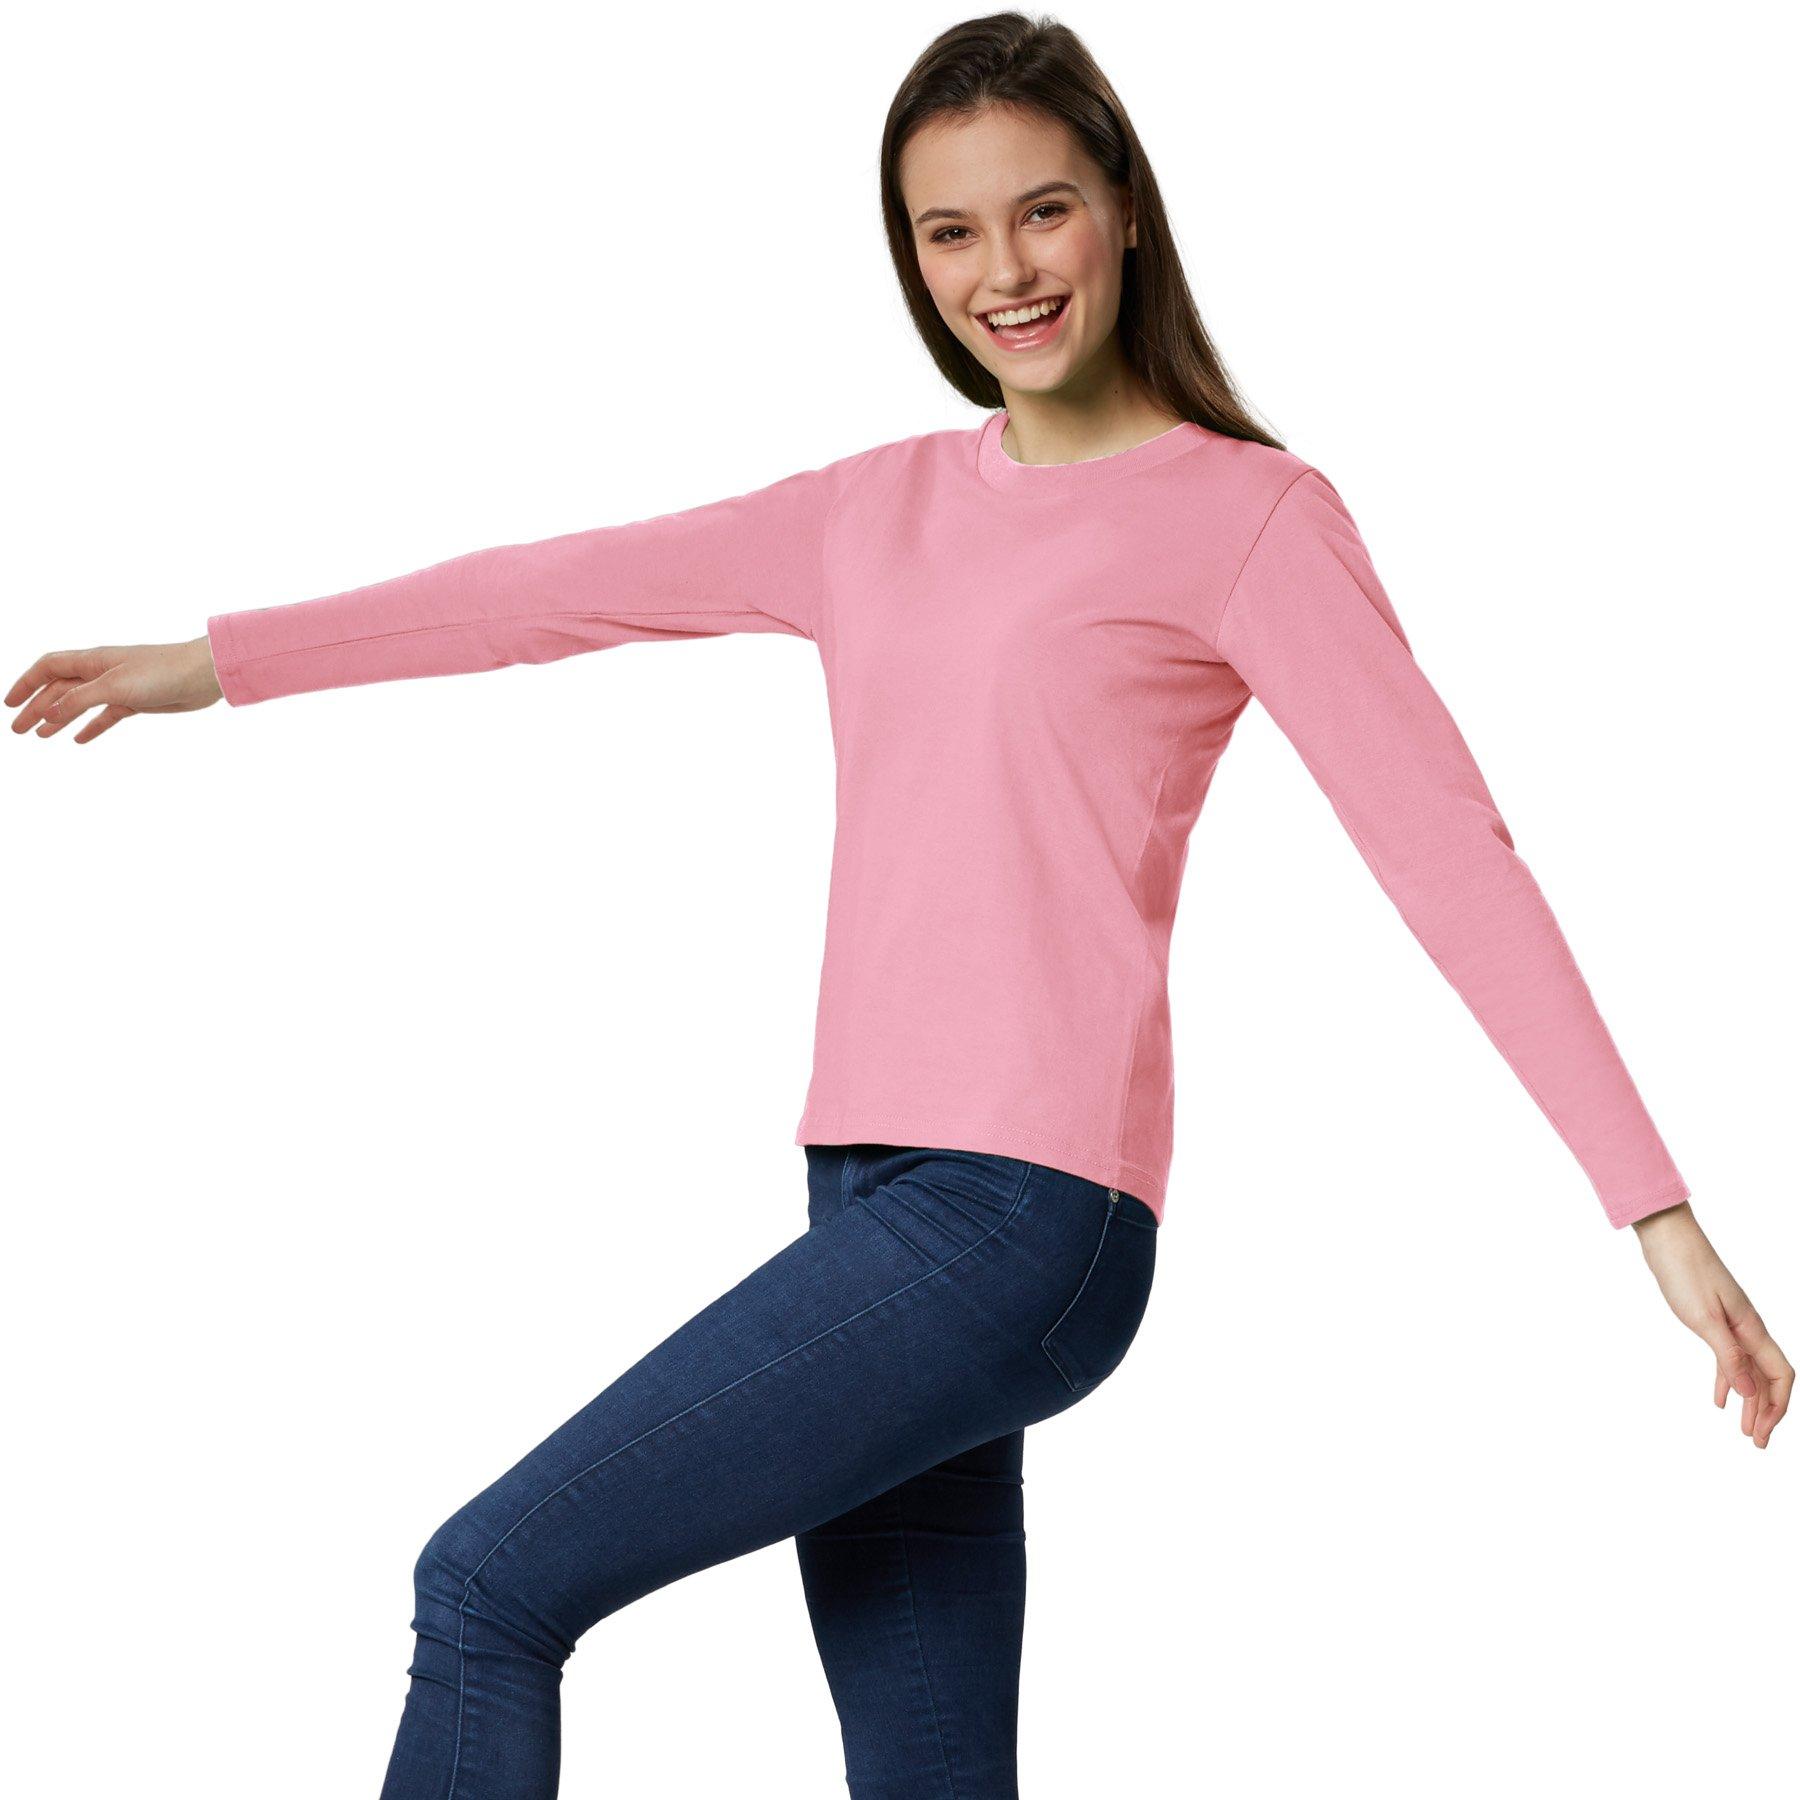 Langarm-shirt Frauen Damen Rosa XL von Tectake